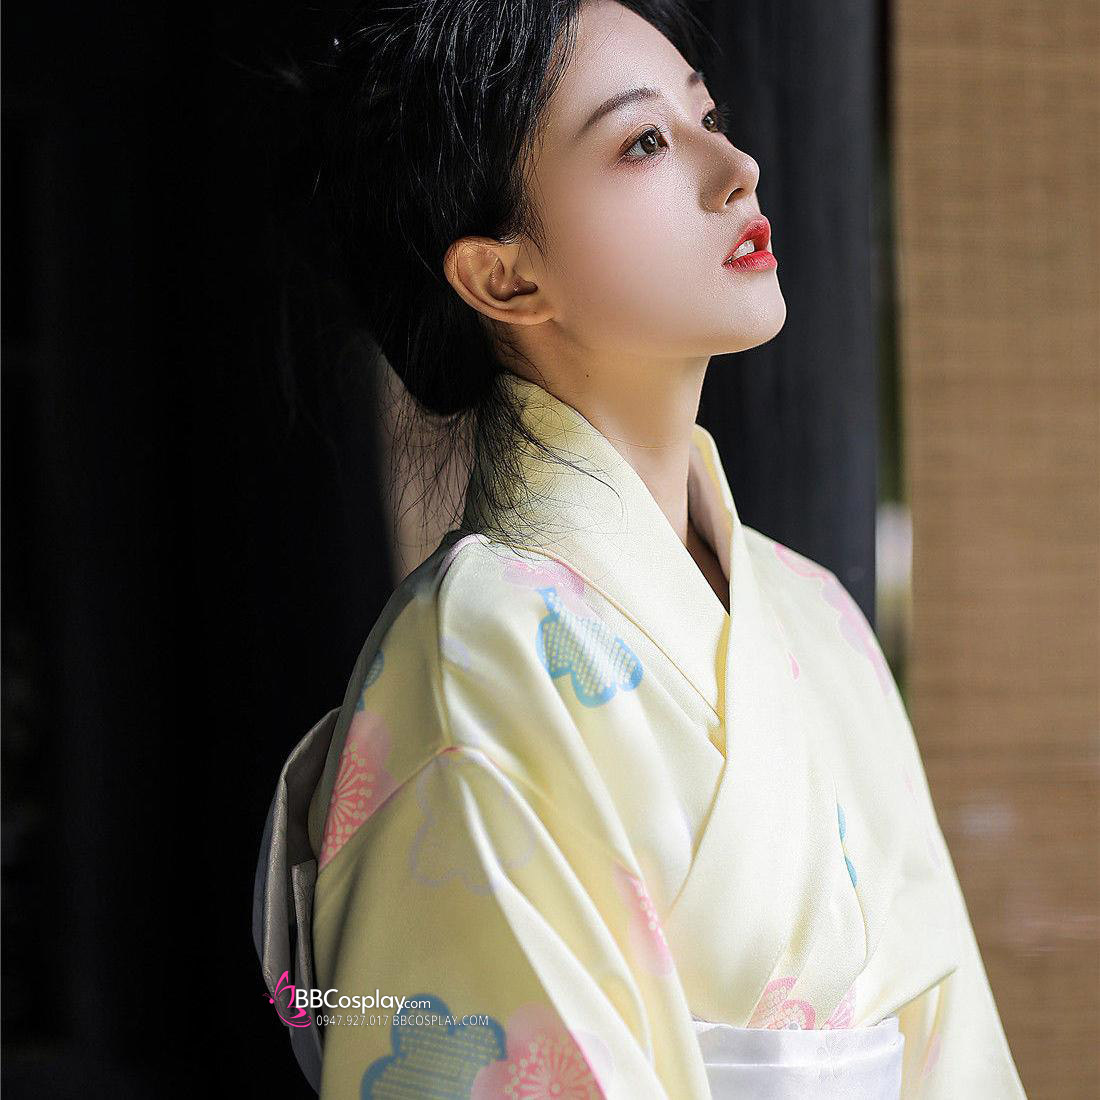 Áo Kimono Yukata Kiniro Hoa Tặng Kèm Thắt Lưng